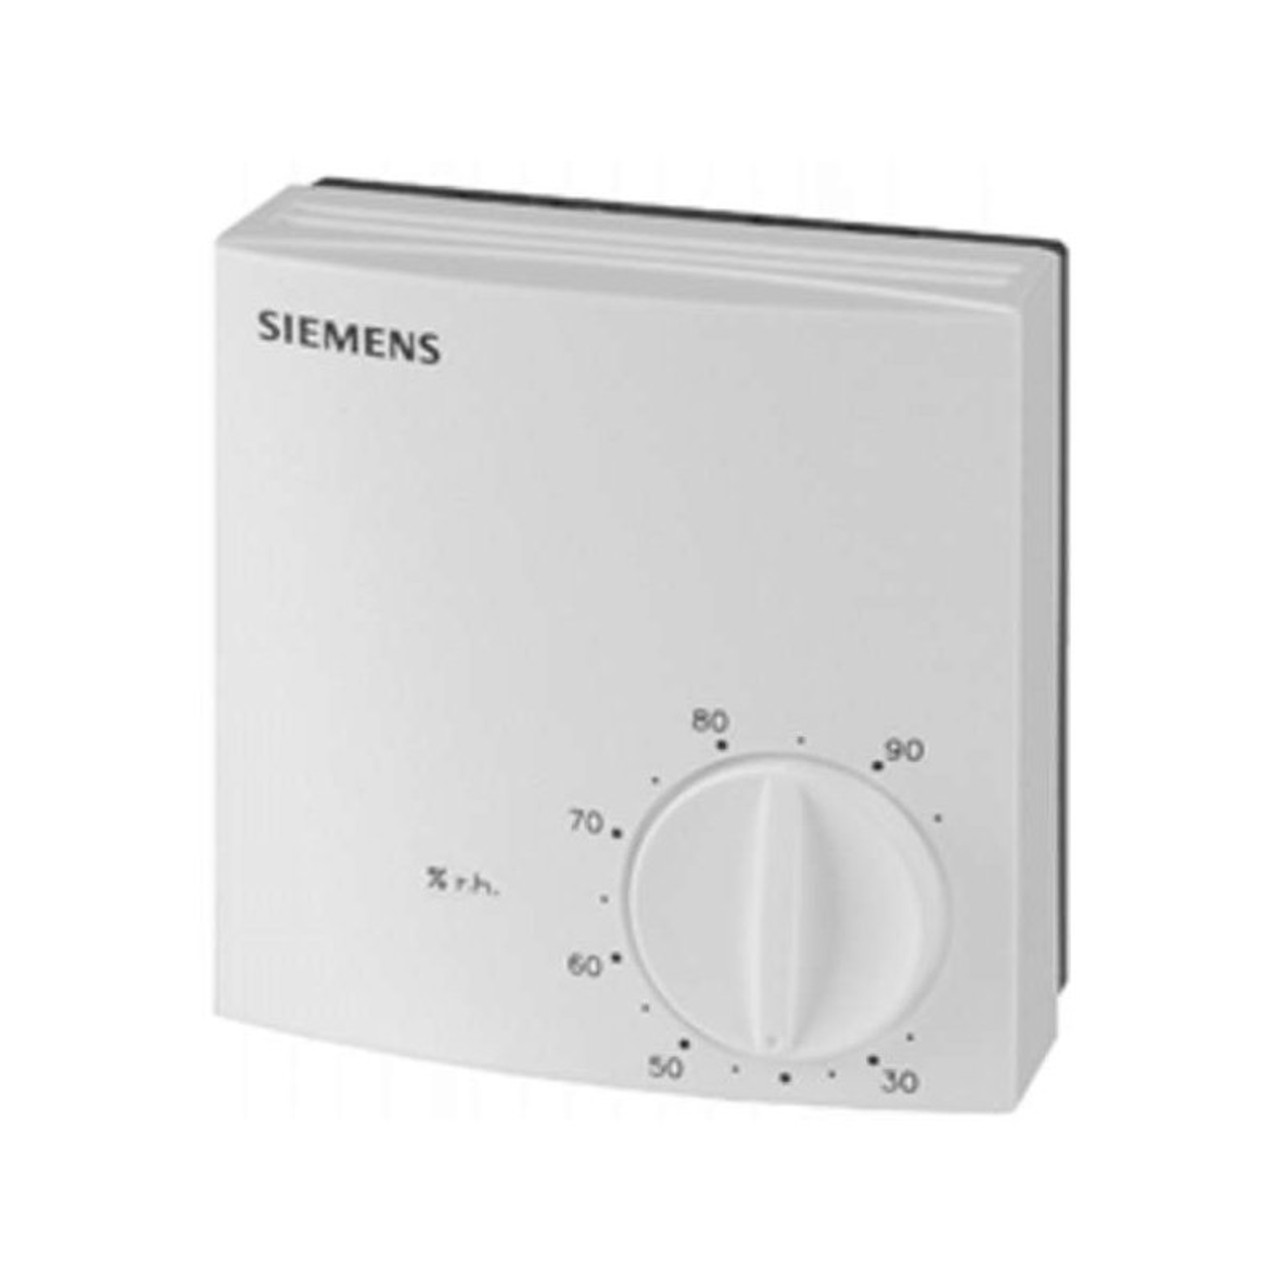 Siemens QFA1001 Room hygrostat, setpoint setting range 30...90